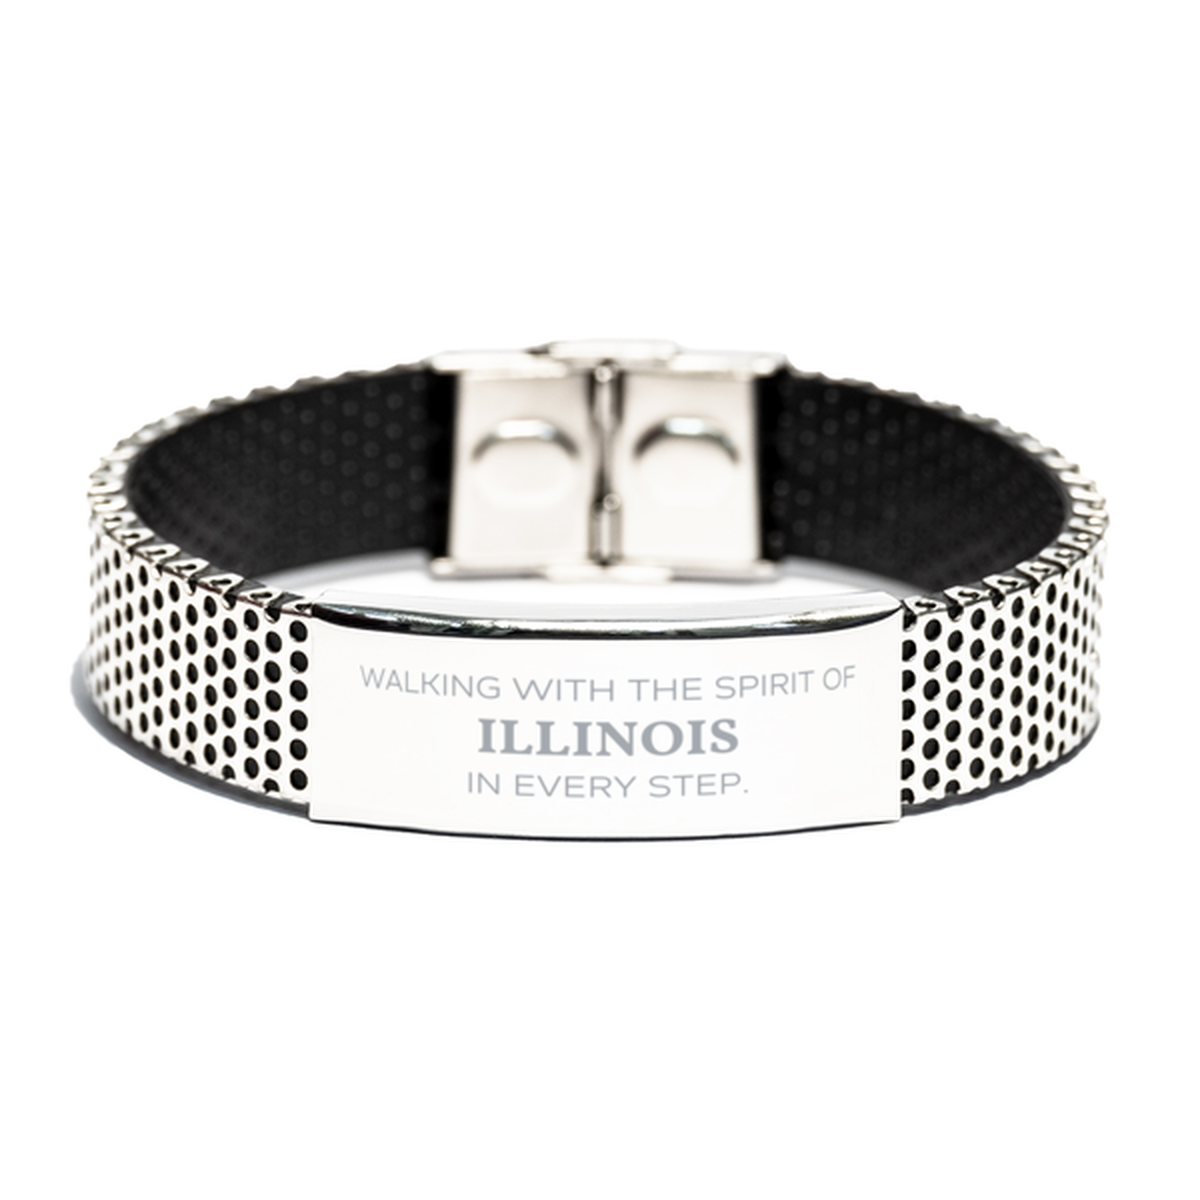 Illinois Gifts, Walking with the spirit, Love Illinois Birthday Christmas Stainless Steel Bracelet For Illinois People, Men, Women, Friends